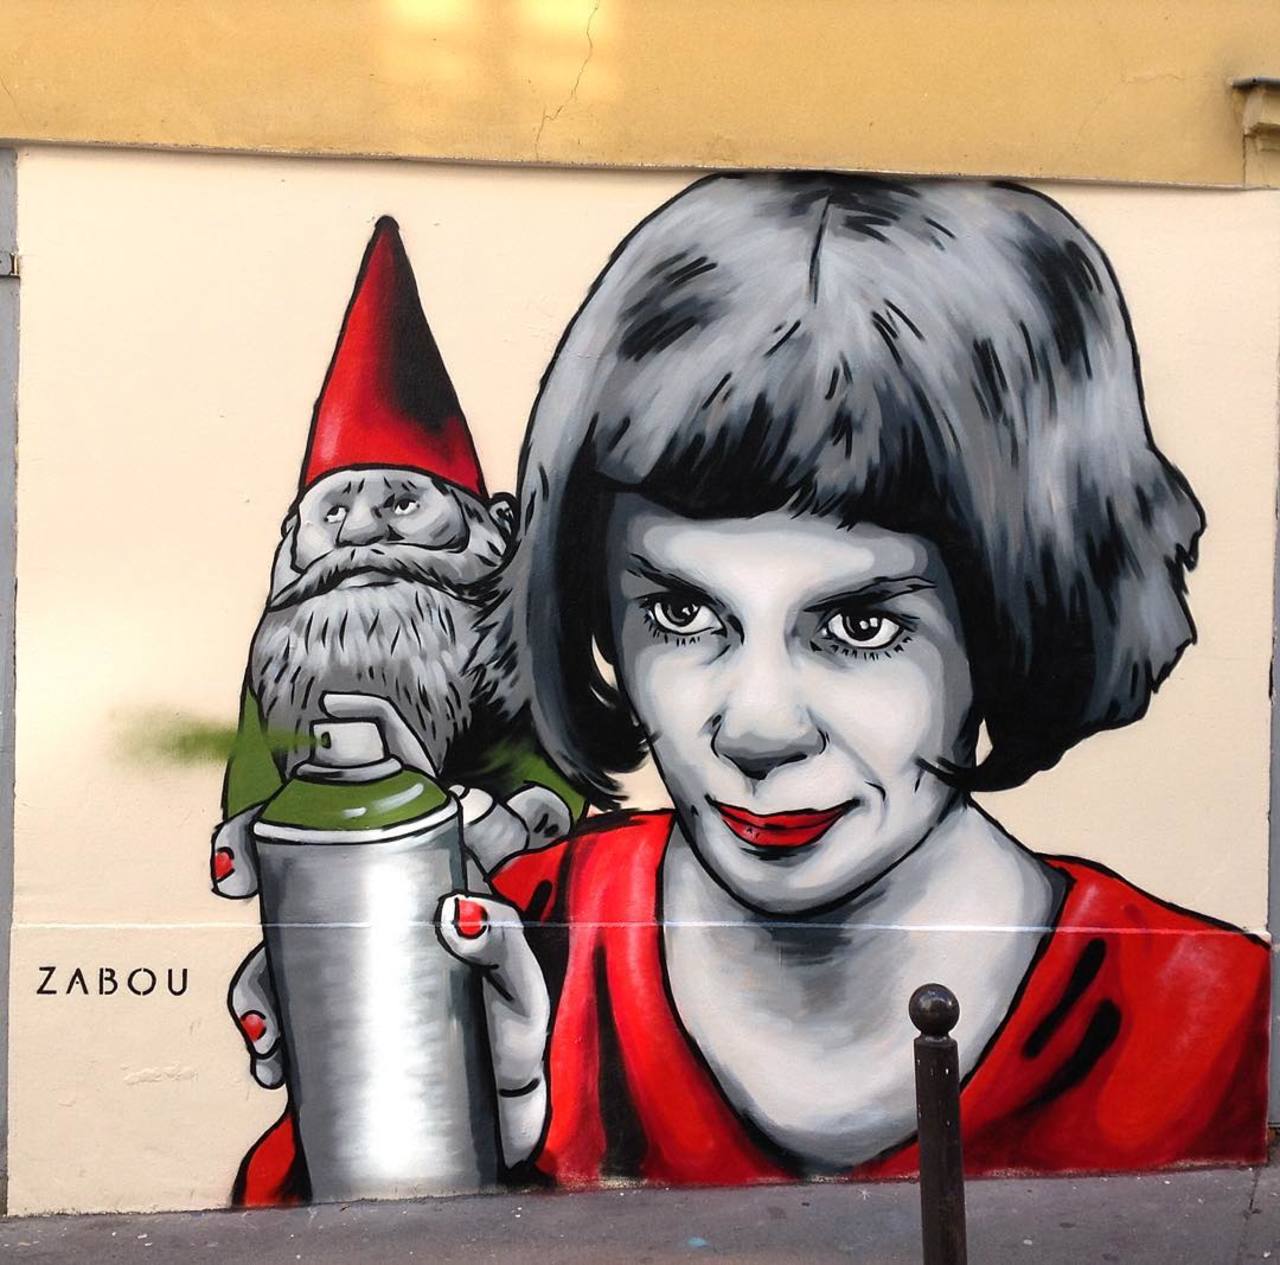 #Paris #graffiti photo by @vgsman http://ift.tt/1ZziWnY #StreetArt http://t.co/2jED1SR44p